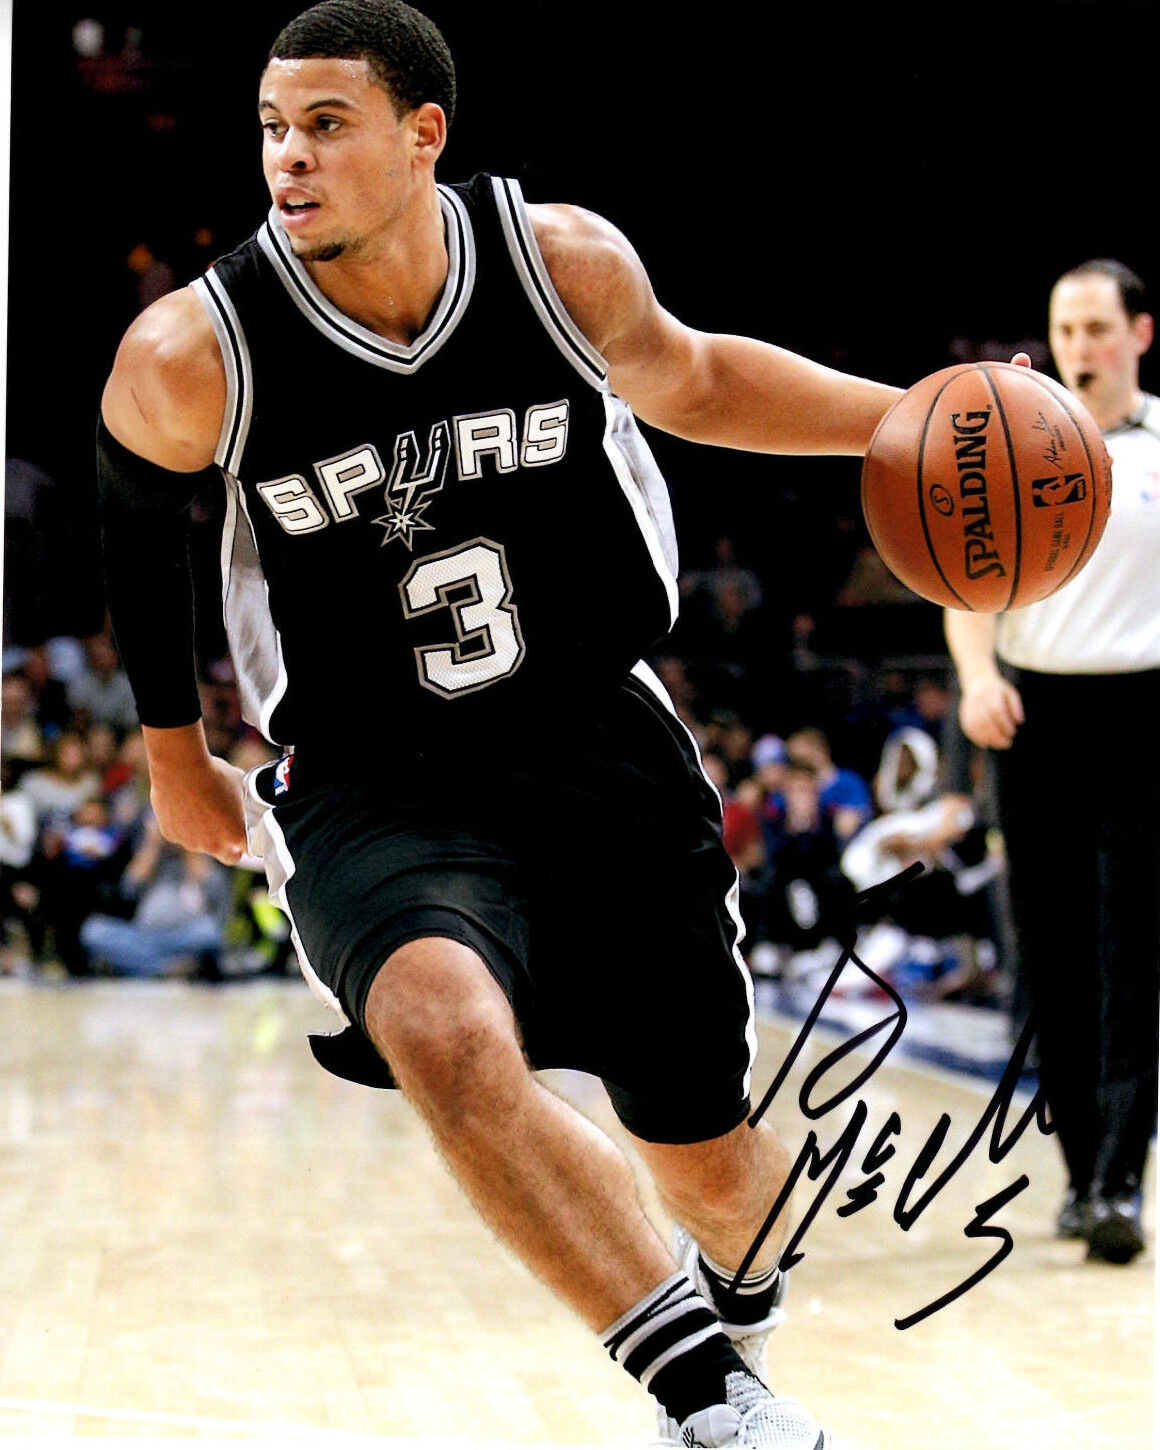 Ray McCallum Jr hand signed autographed 8x10 Photo Poster painting Detroit Titans Spurs Pistons*